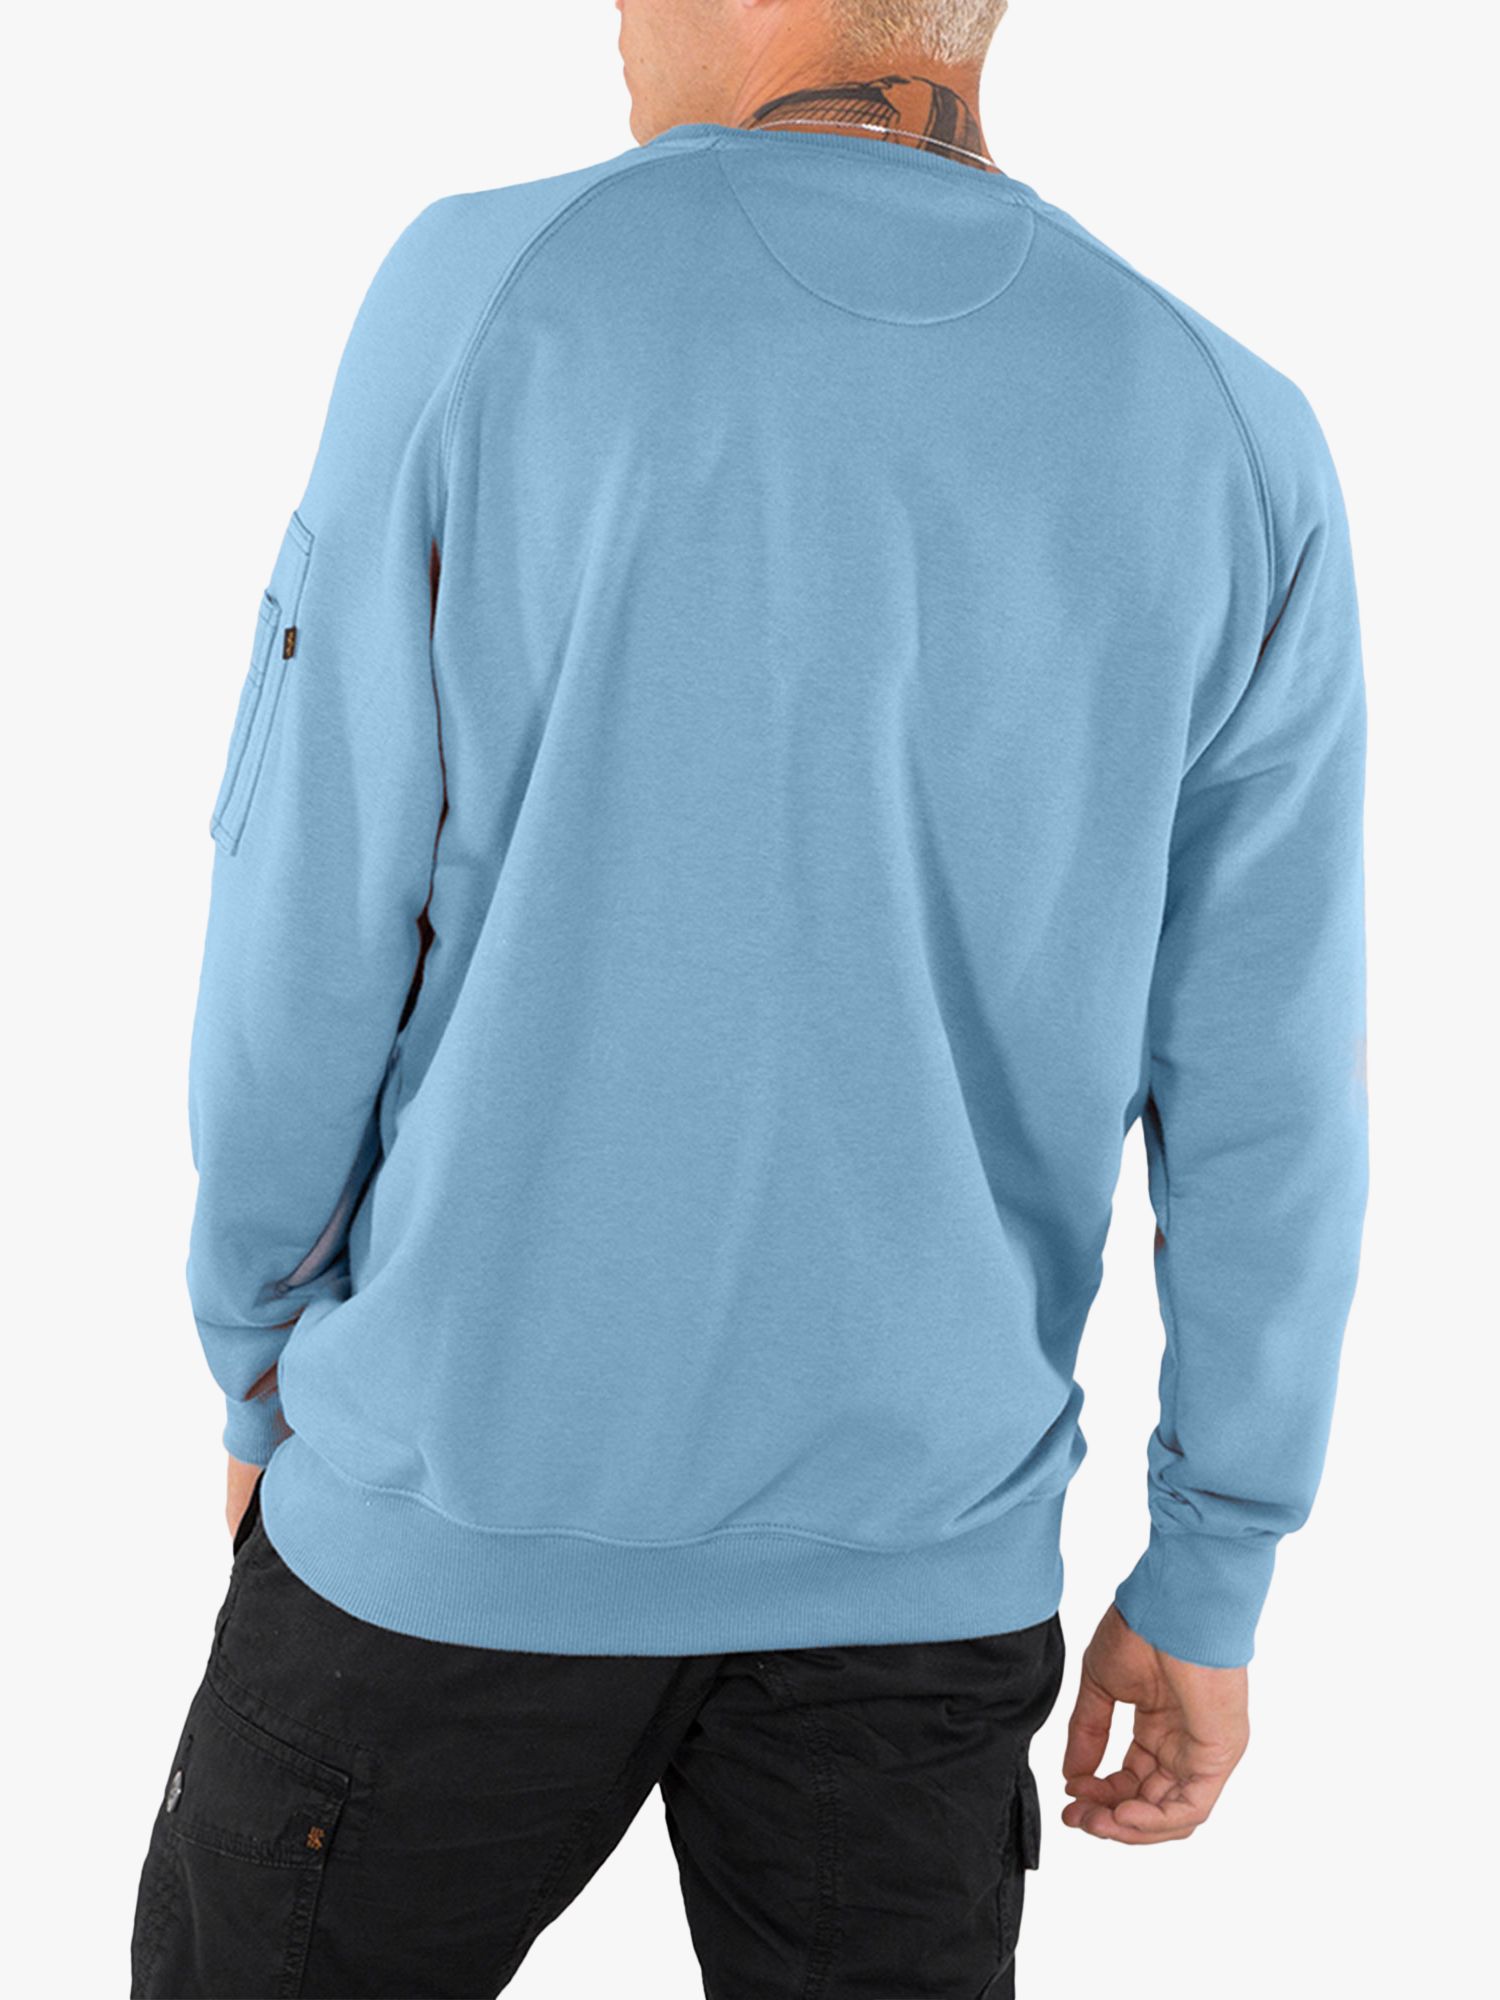 Blue Zip Alpha Lewis Industries X-Fit Pocket Sweatshirt, Sleeve at Partners & John Light